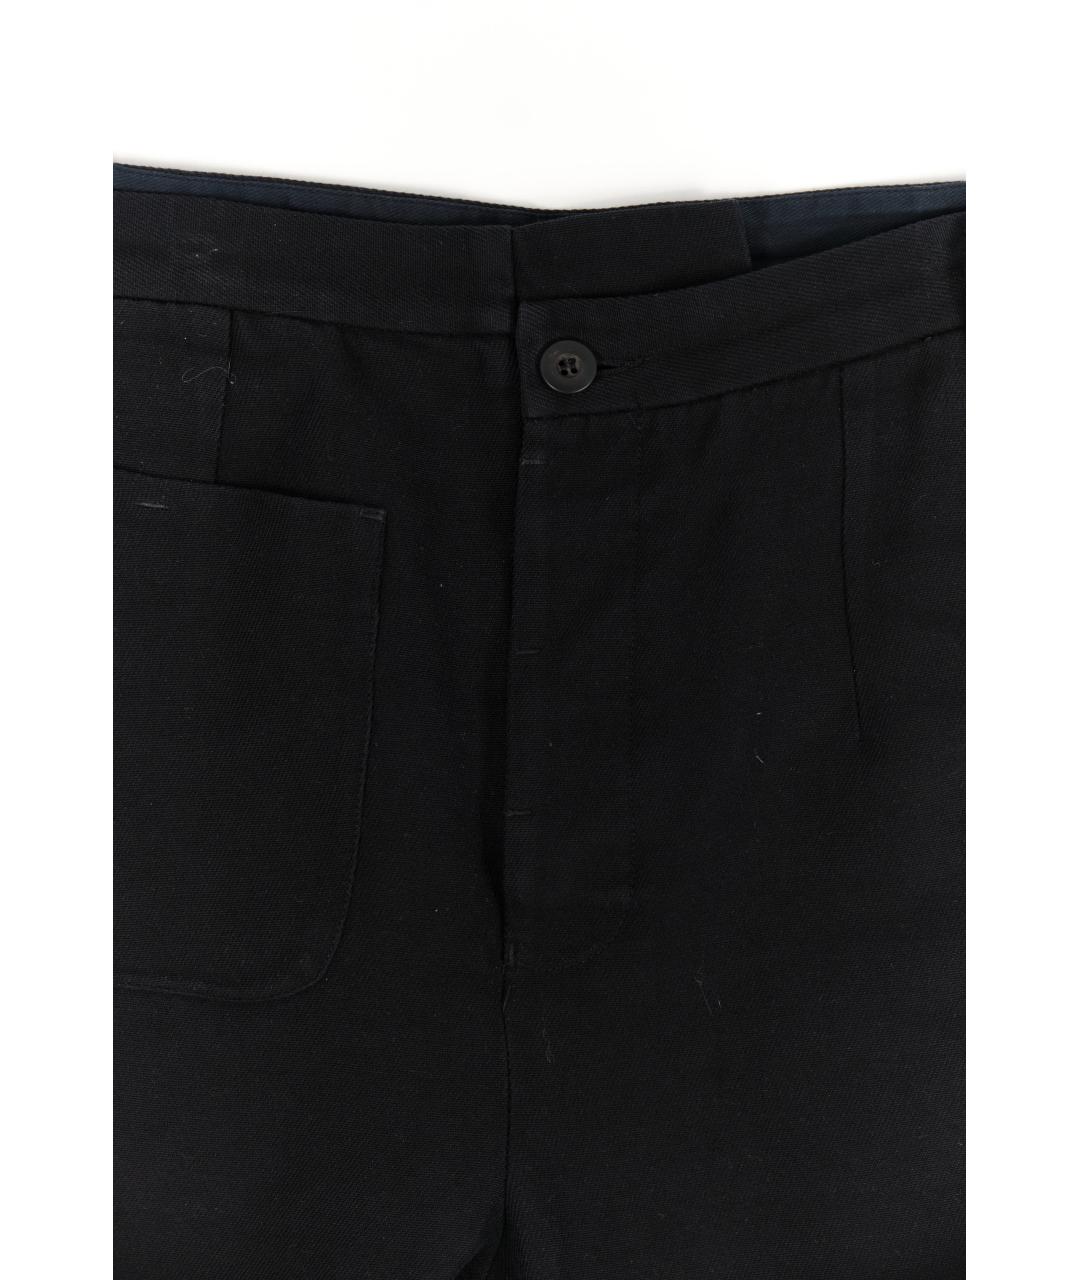 LOST & FOUND RIA DUNN Черные хлопковые брюки чинос, фото 4